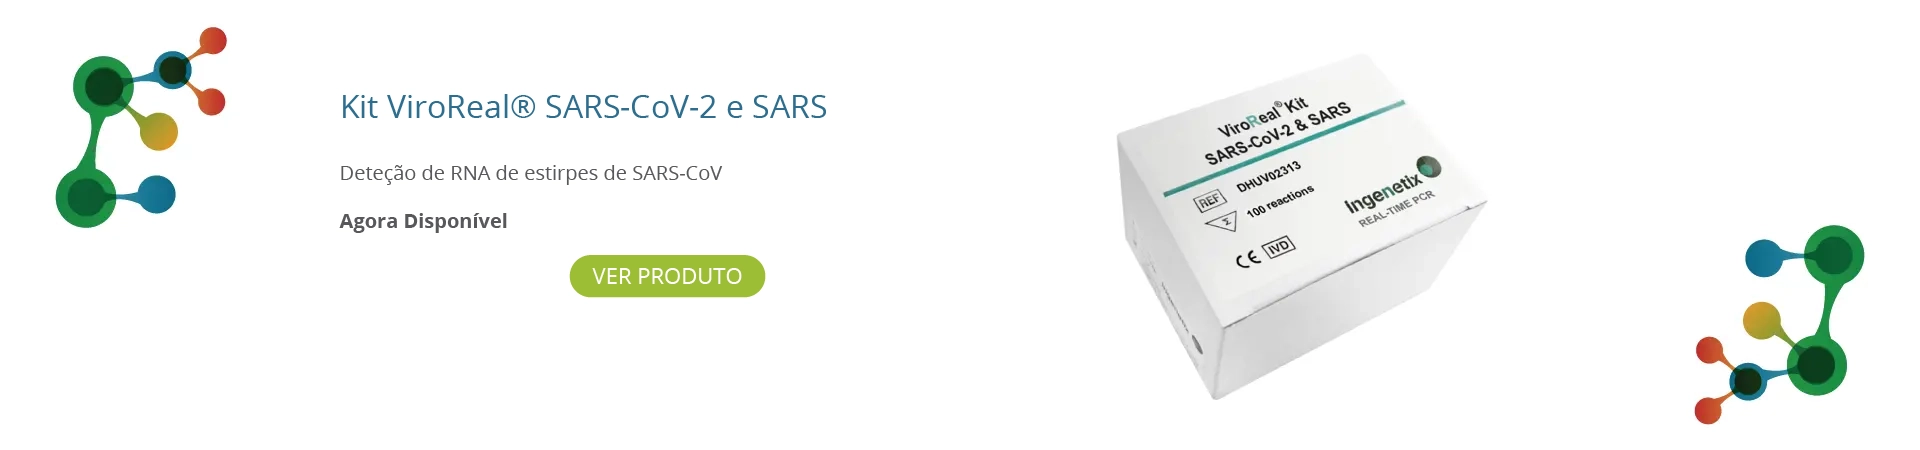 Kit ViroReal® SARS-CoV-2 e SARS